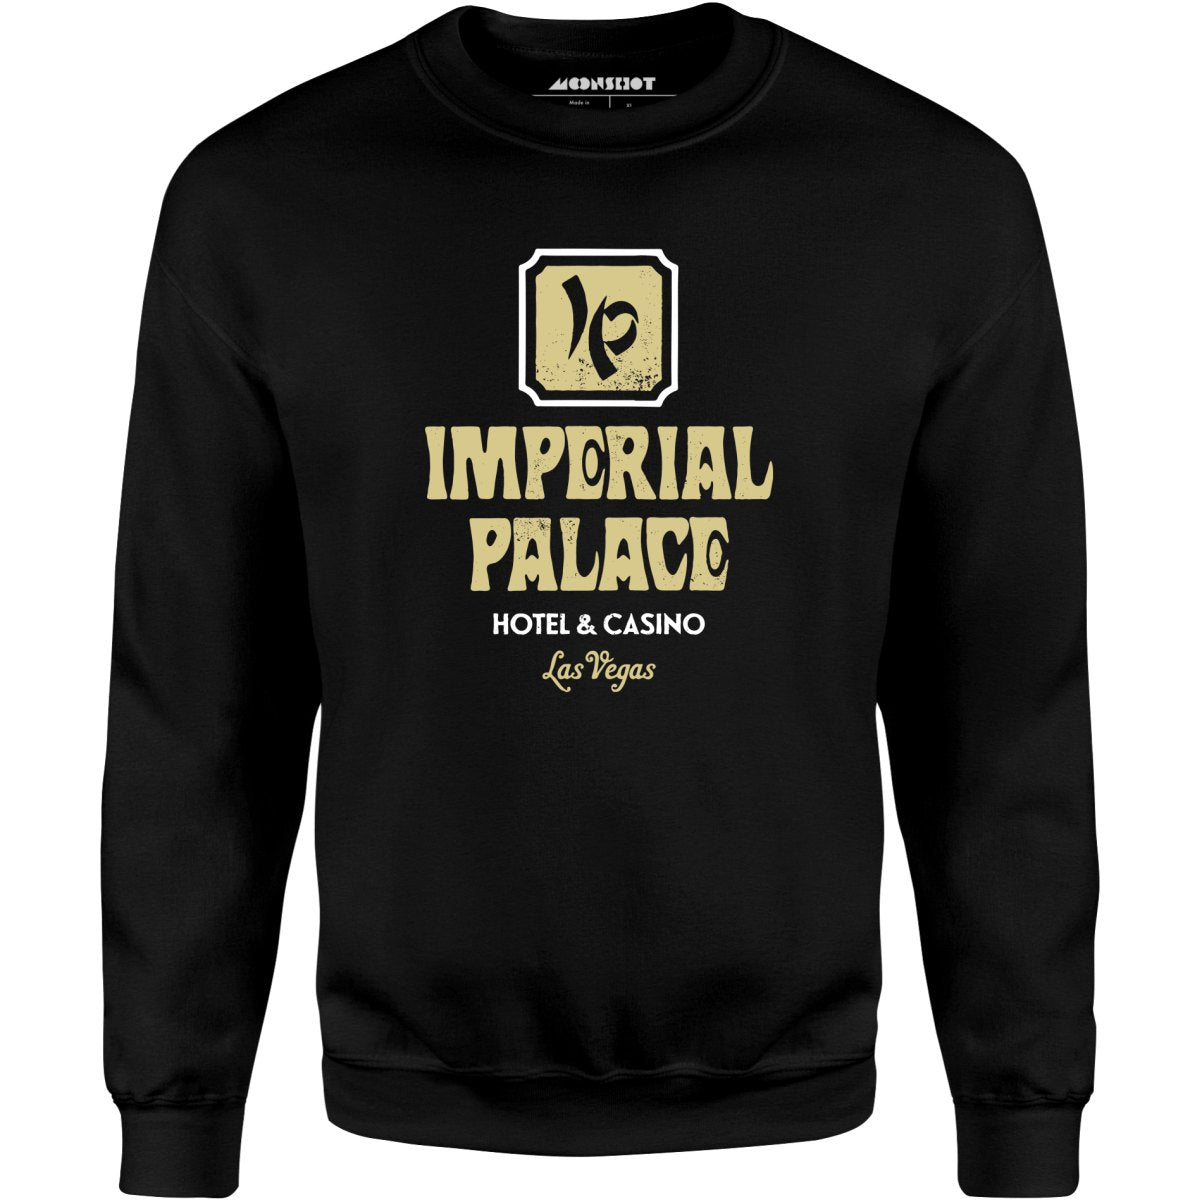 Imperial Palace Hotel & Casino - Vintage Las Vegas - Unisex Sweatshirt